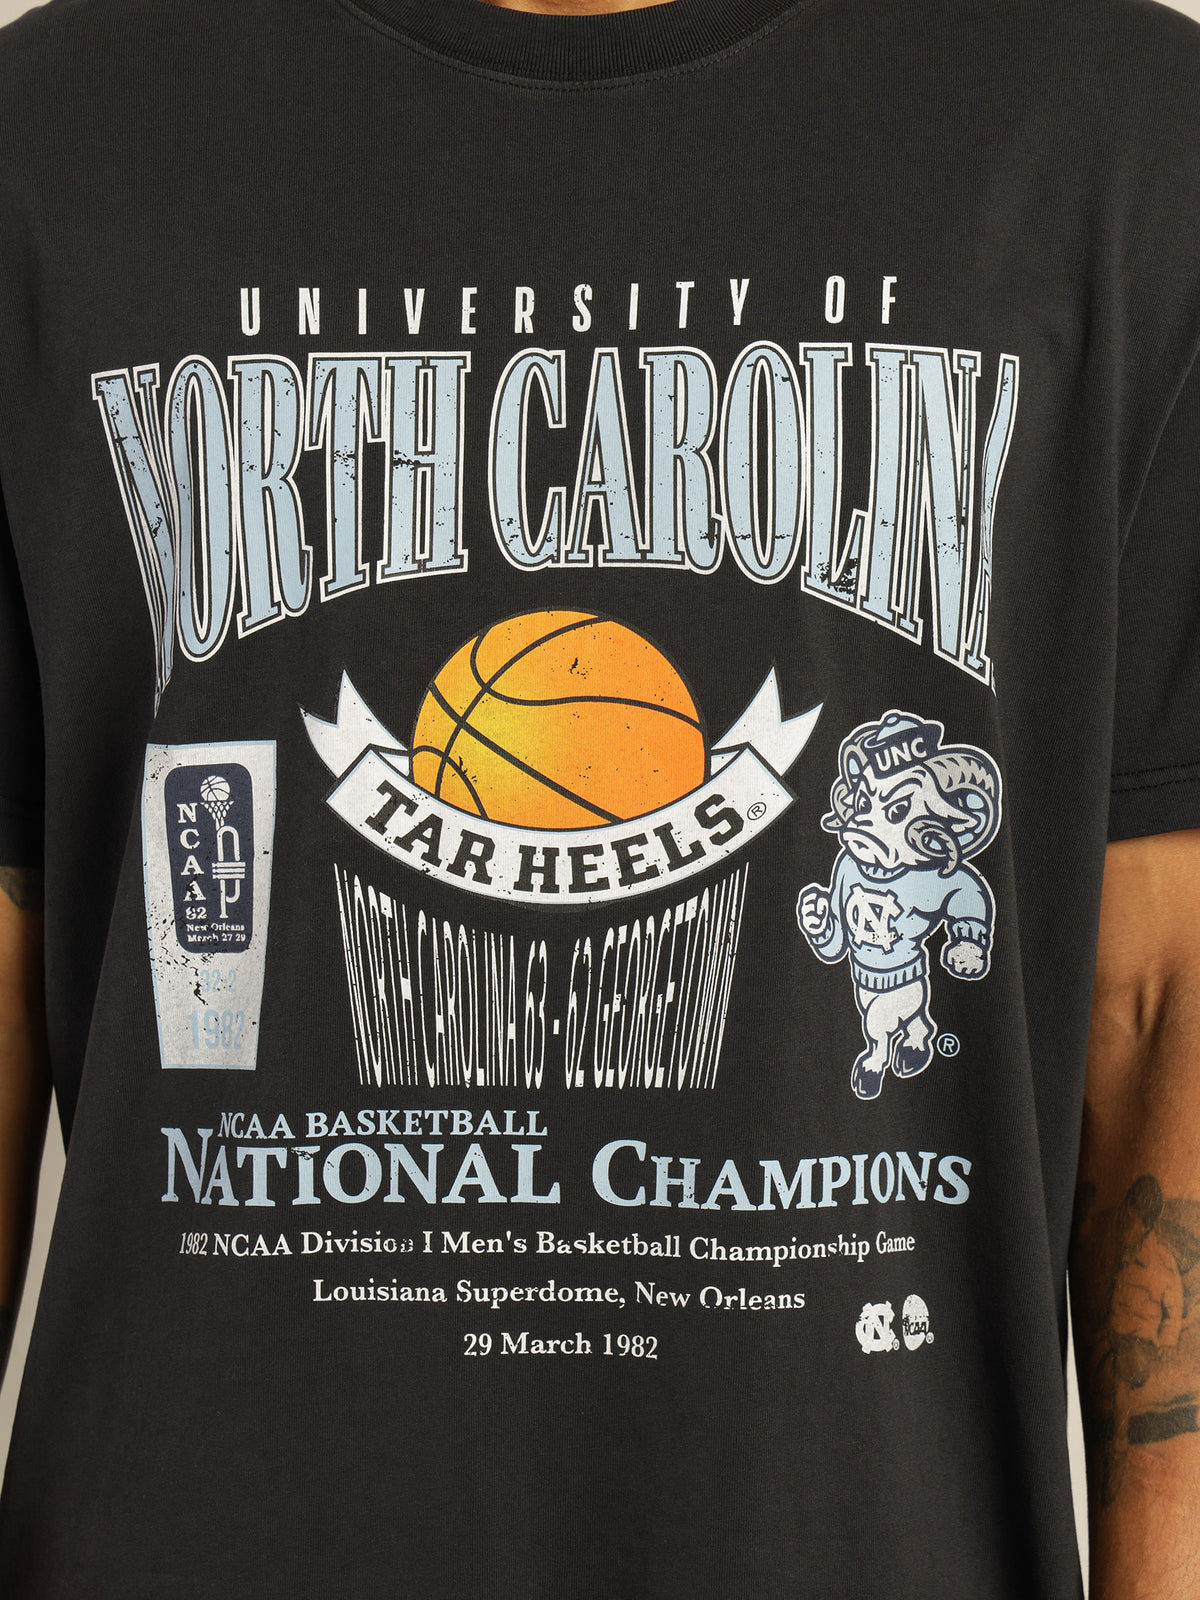 North Carolina National Champions Vintage T-Shirt in Faded Black